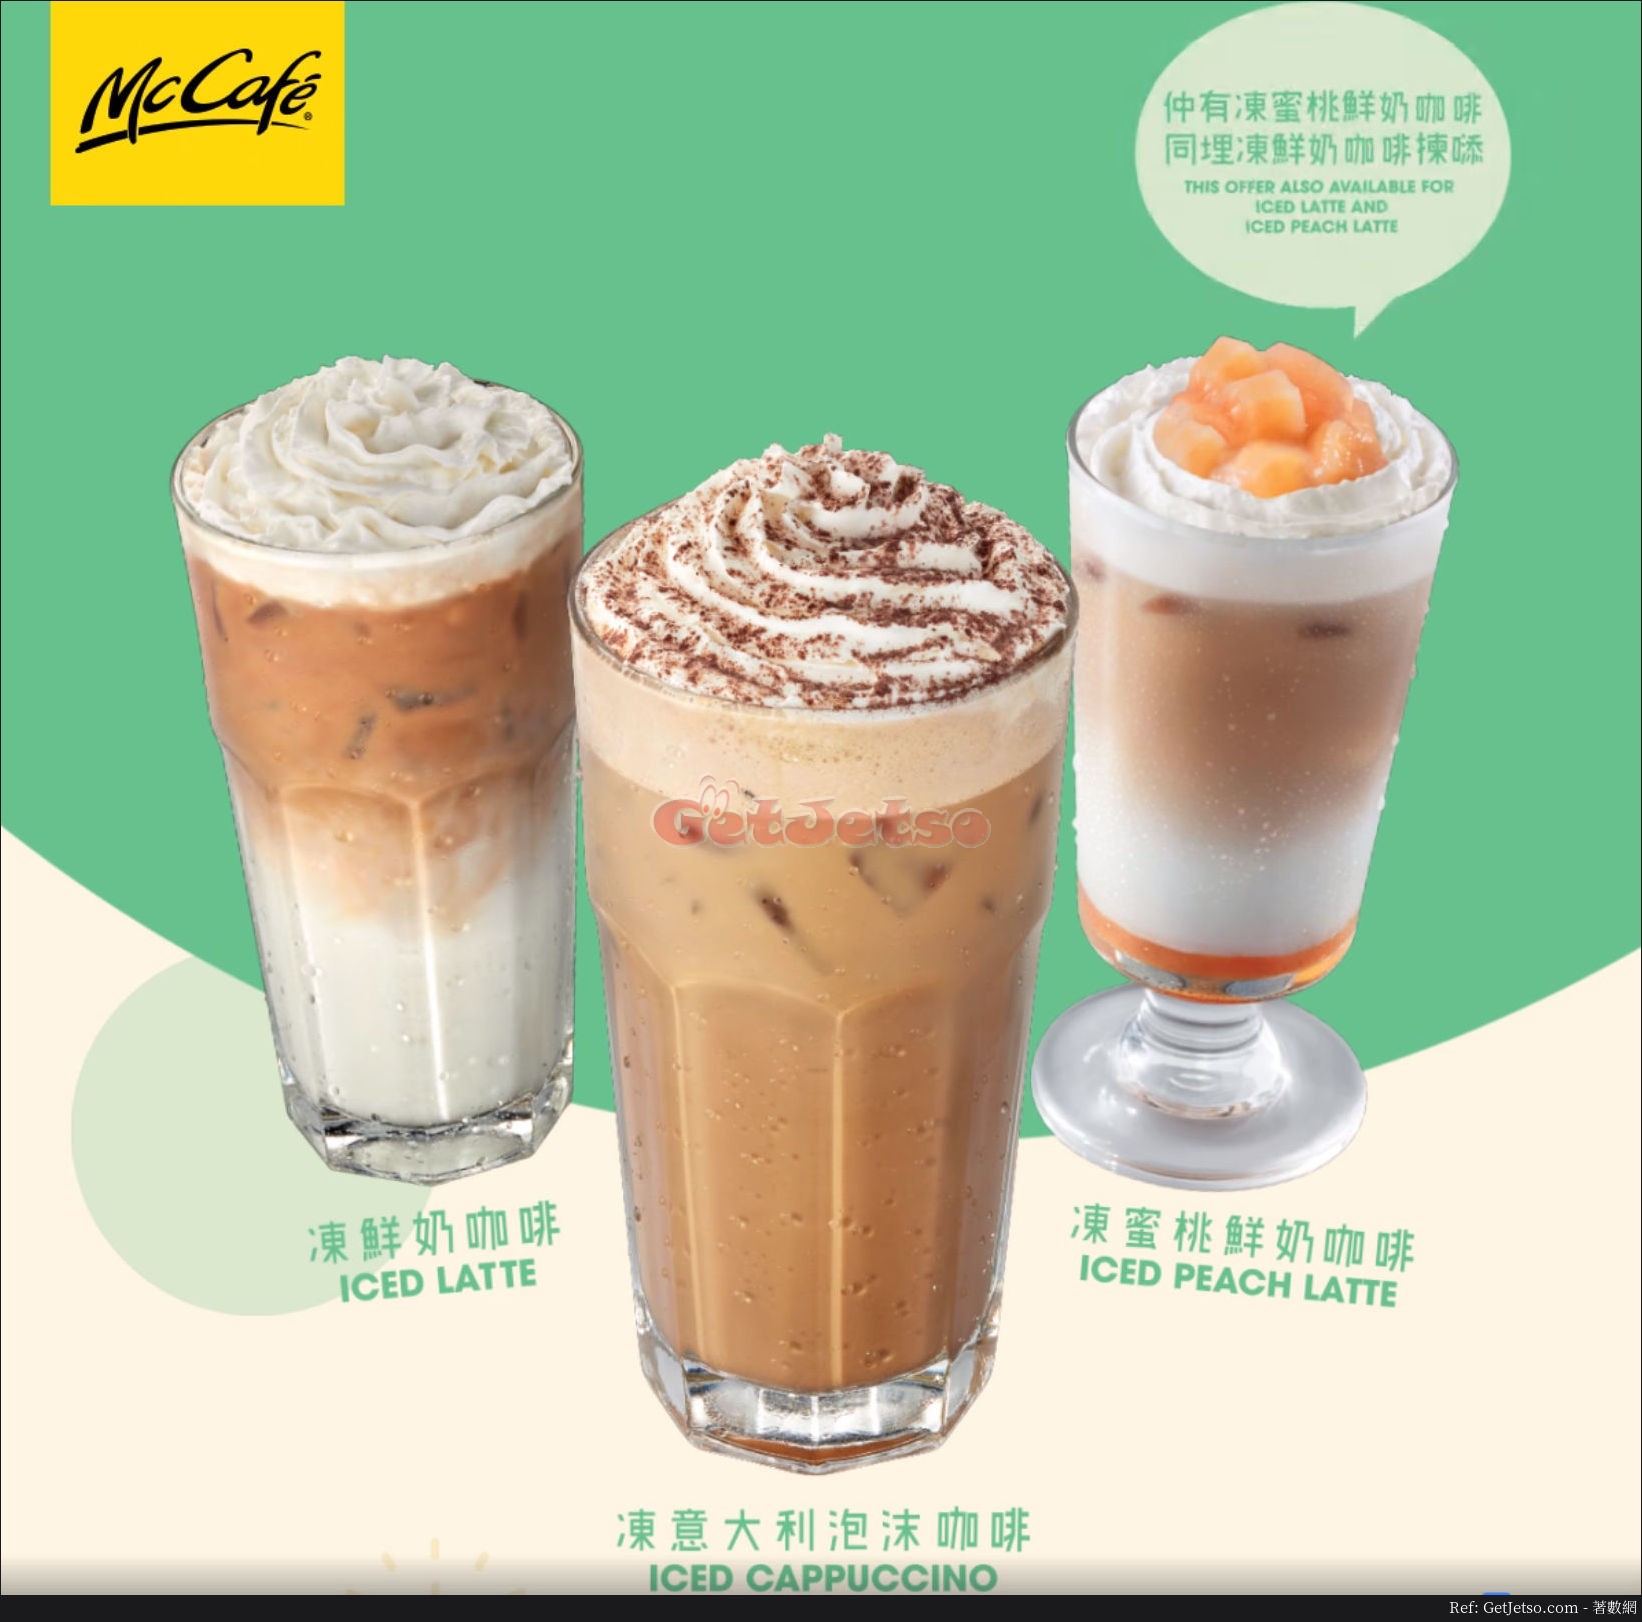 McCafe 3-6PM指定大杯裝凍咖啡買1送1優惠(18年9月19日起)圖片2